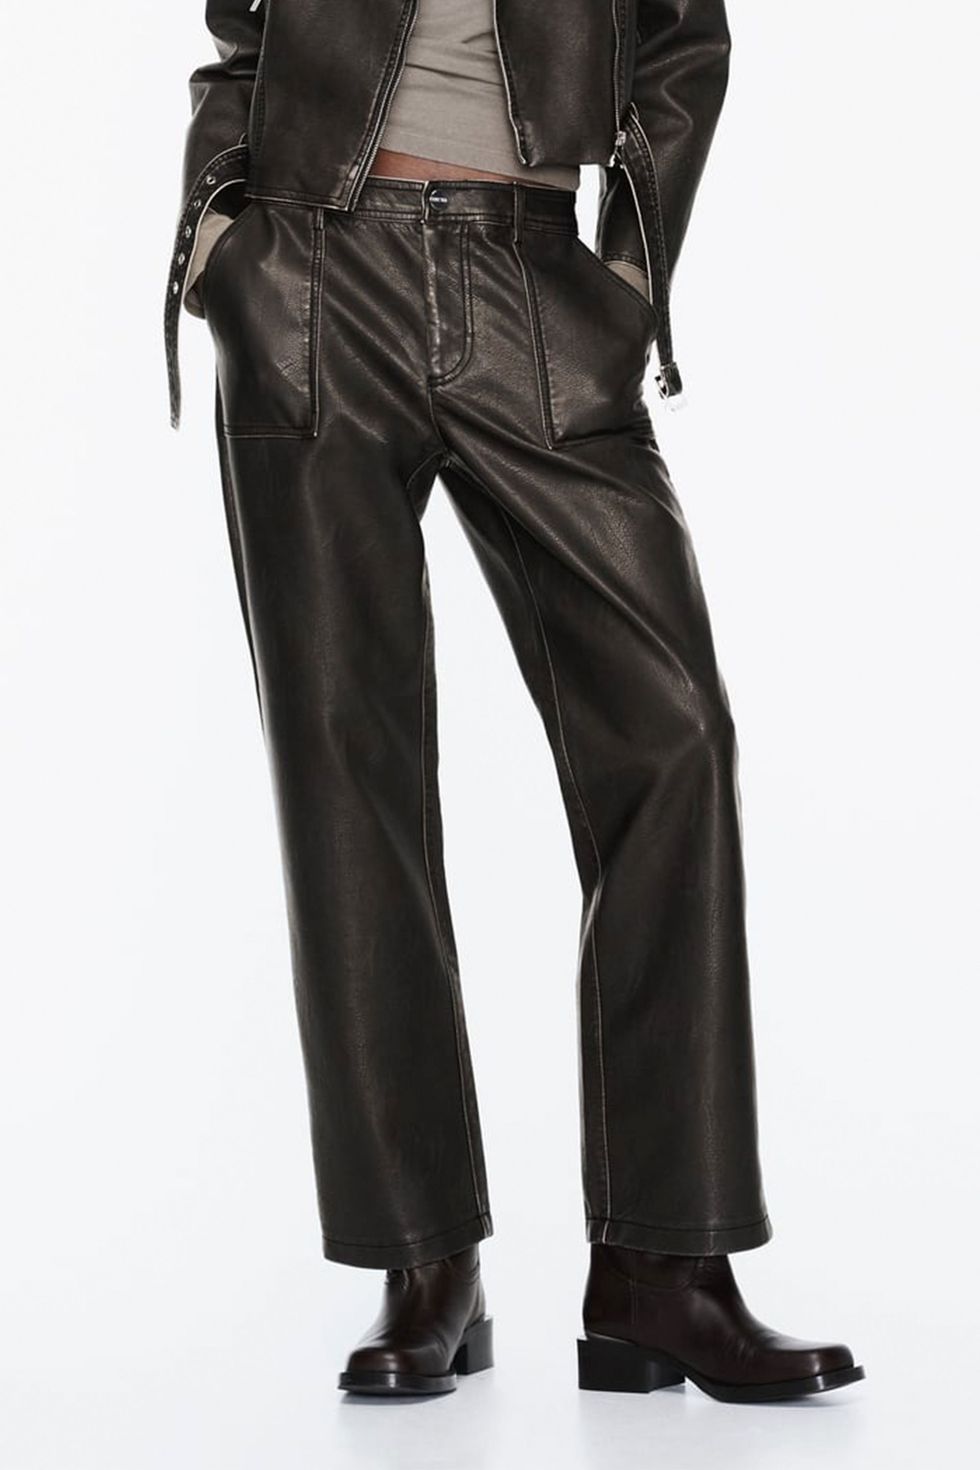 ZARA - WOMAN - FAUX LEATHER LEGGINGS  Leather leggings, Faux leather  leggings, Trousers women